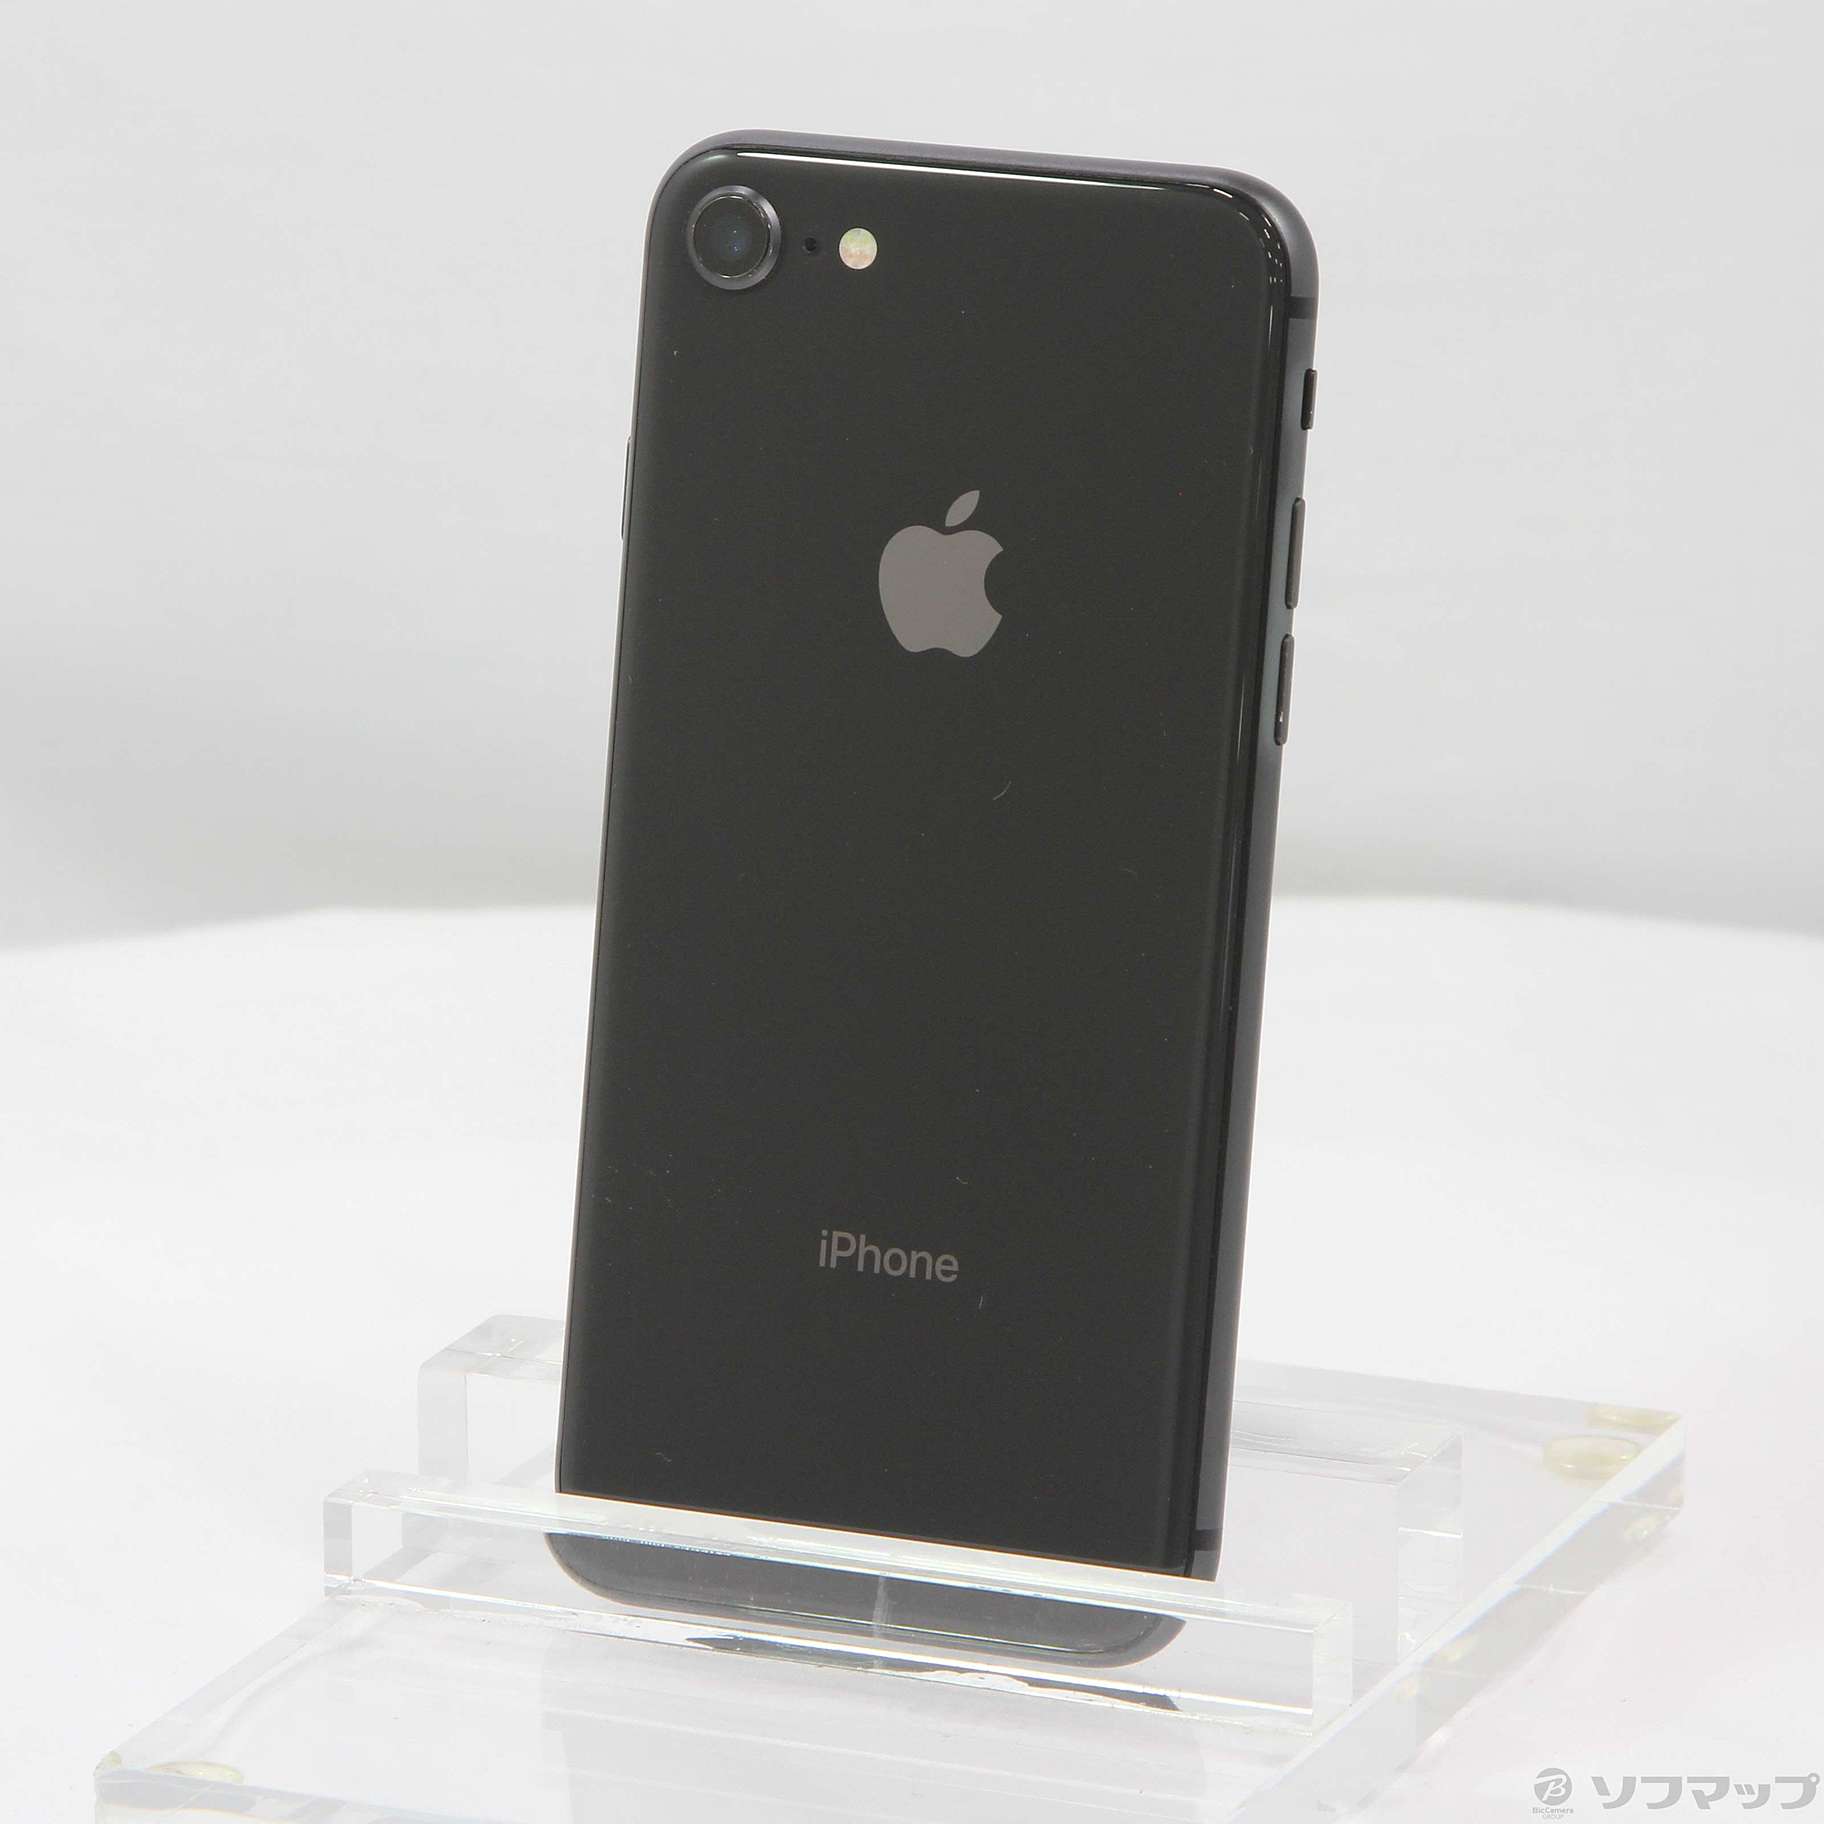 iPhone 8 Space Gray 64GB SIMフリー 本体 _1110